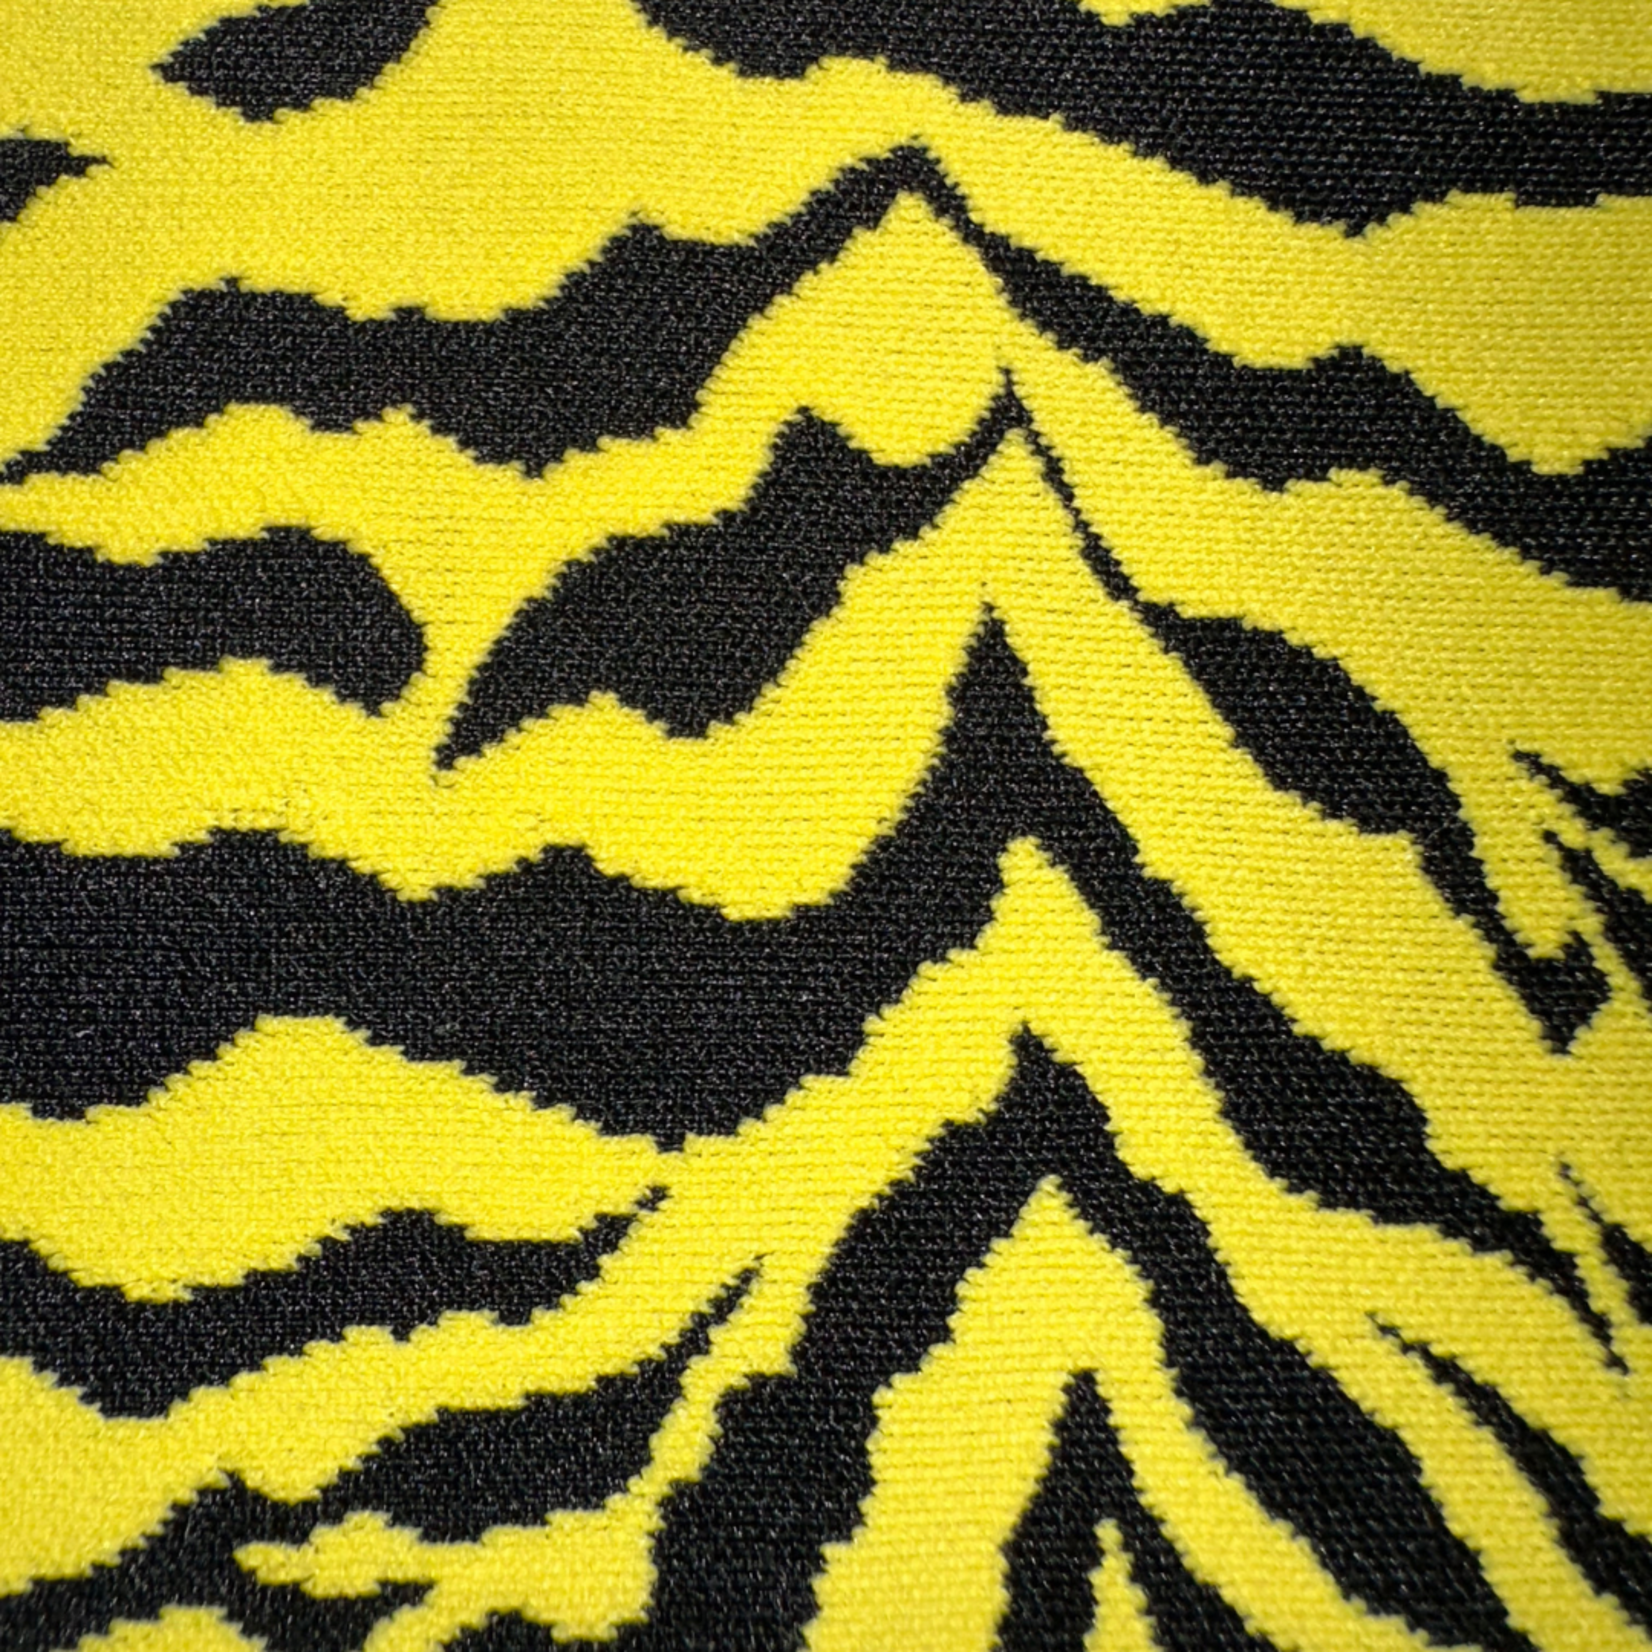 Jacquard Tiger Fabric - Black & Yellow